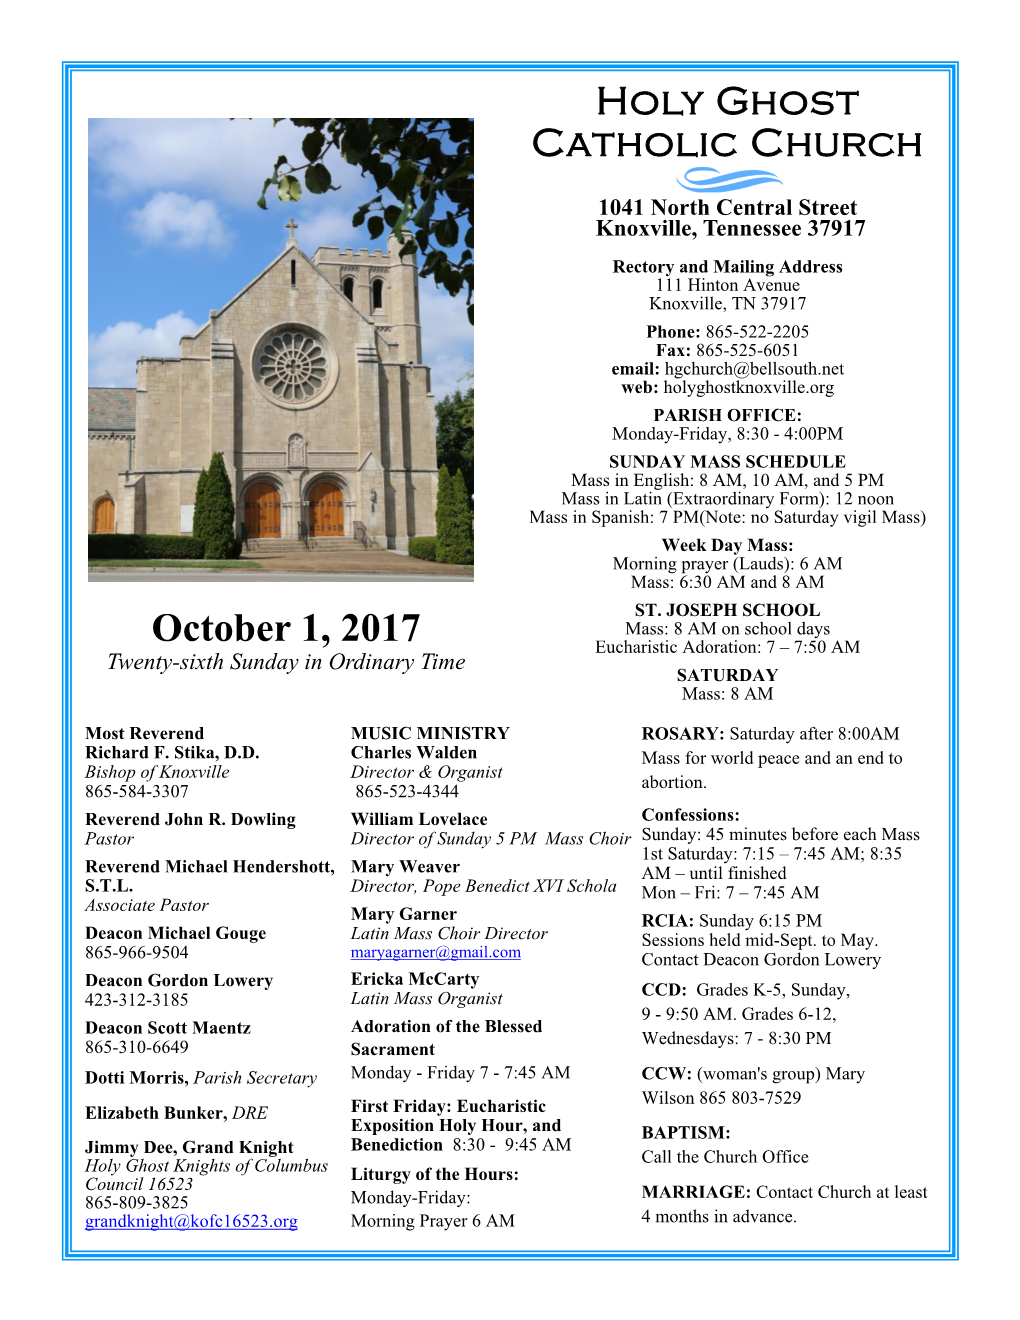 Holy Ghost Catholic Church October 1, 2017